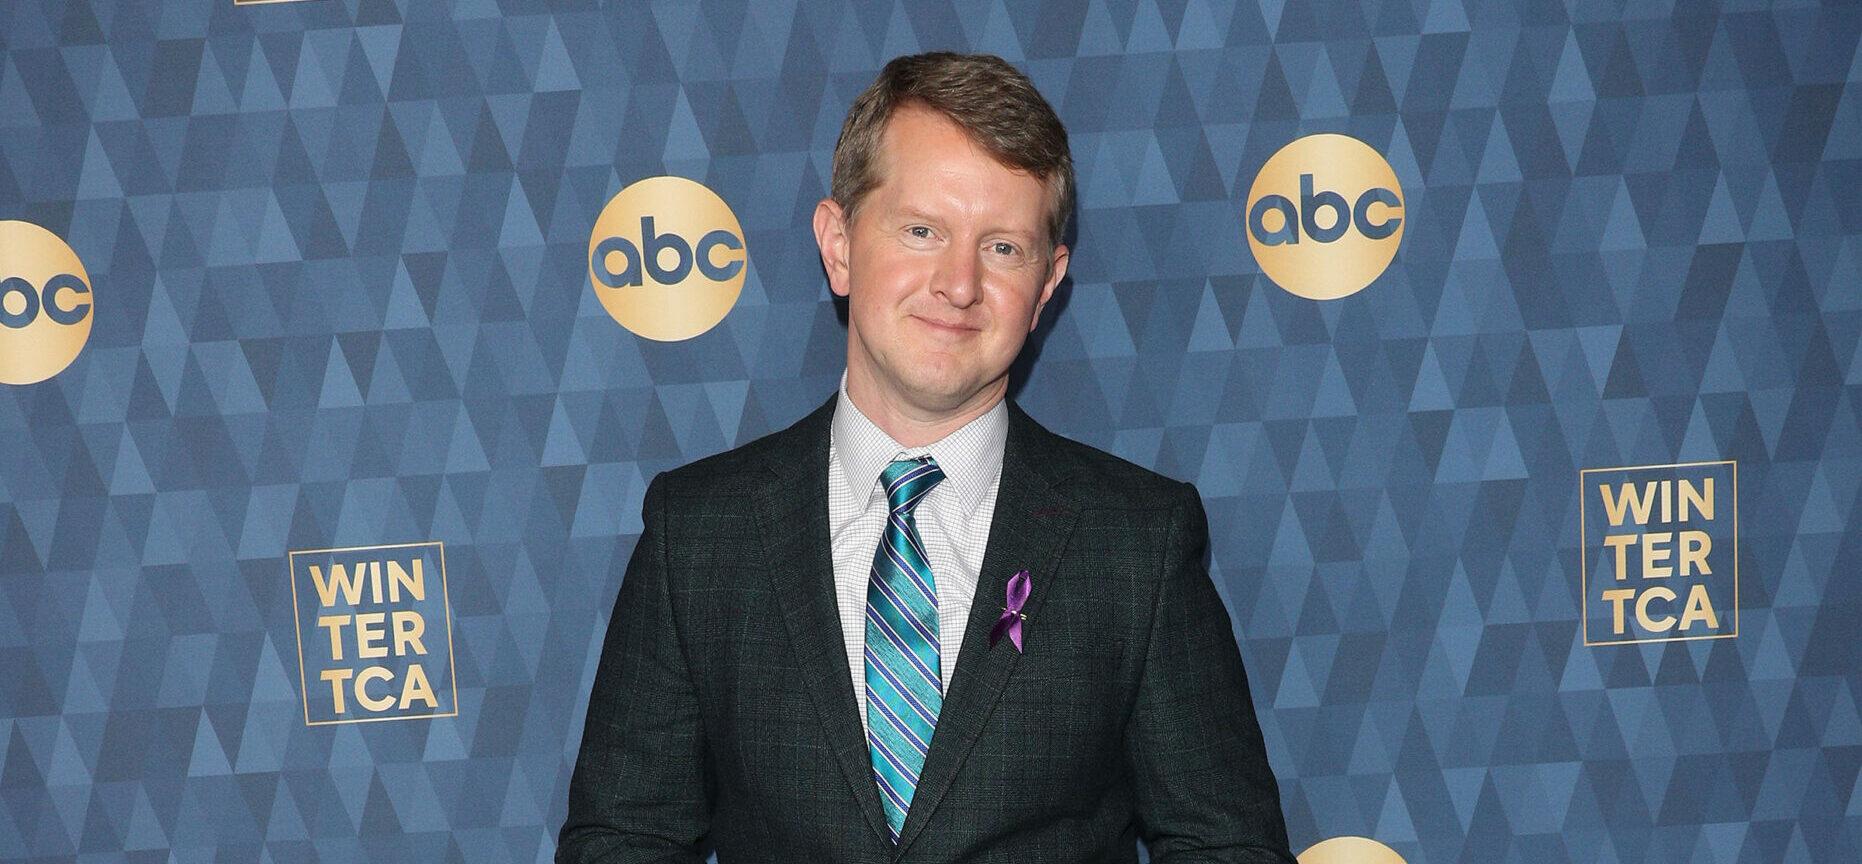 ‘Jeopardy!’ Host Ken Jennings Jokes That He’s Going To Stay On Twitter ‘Forever’